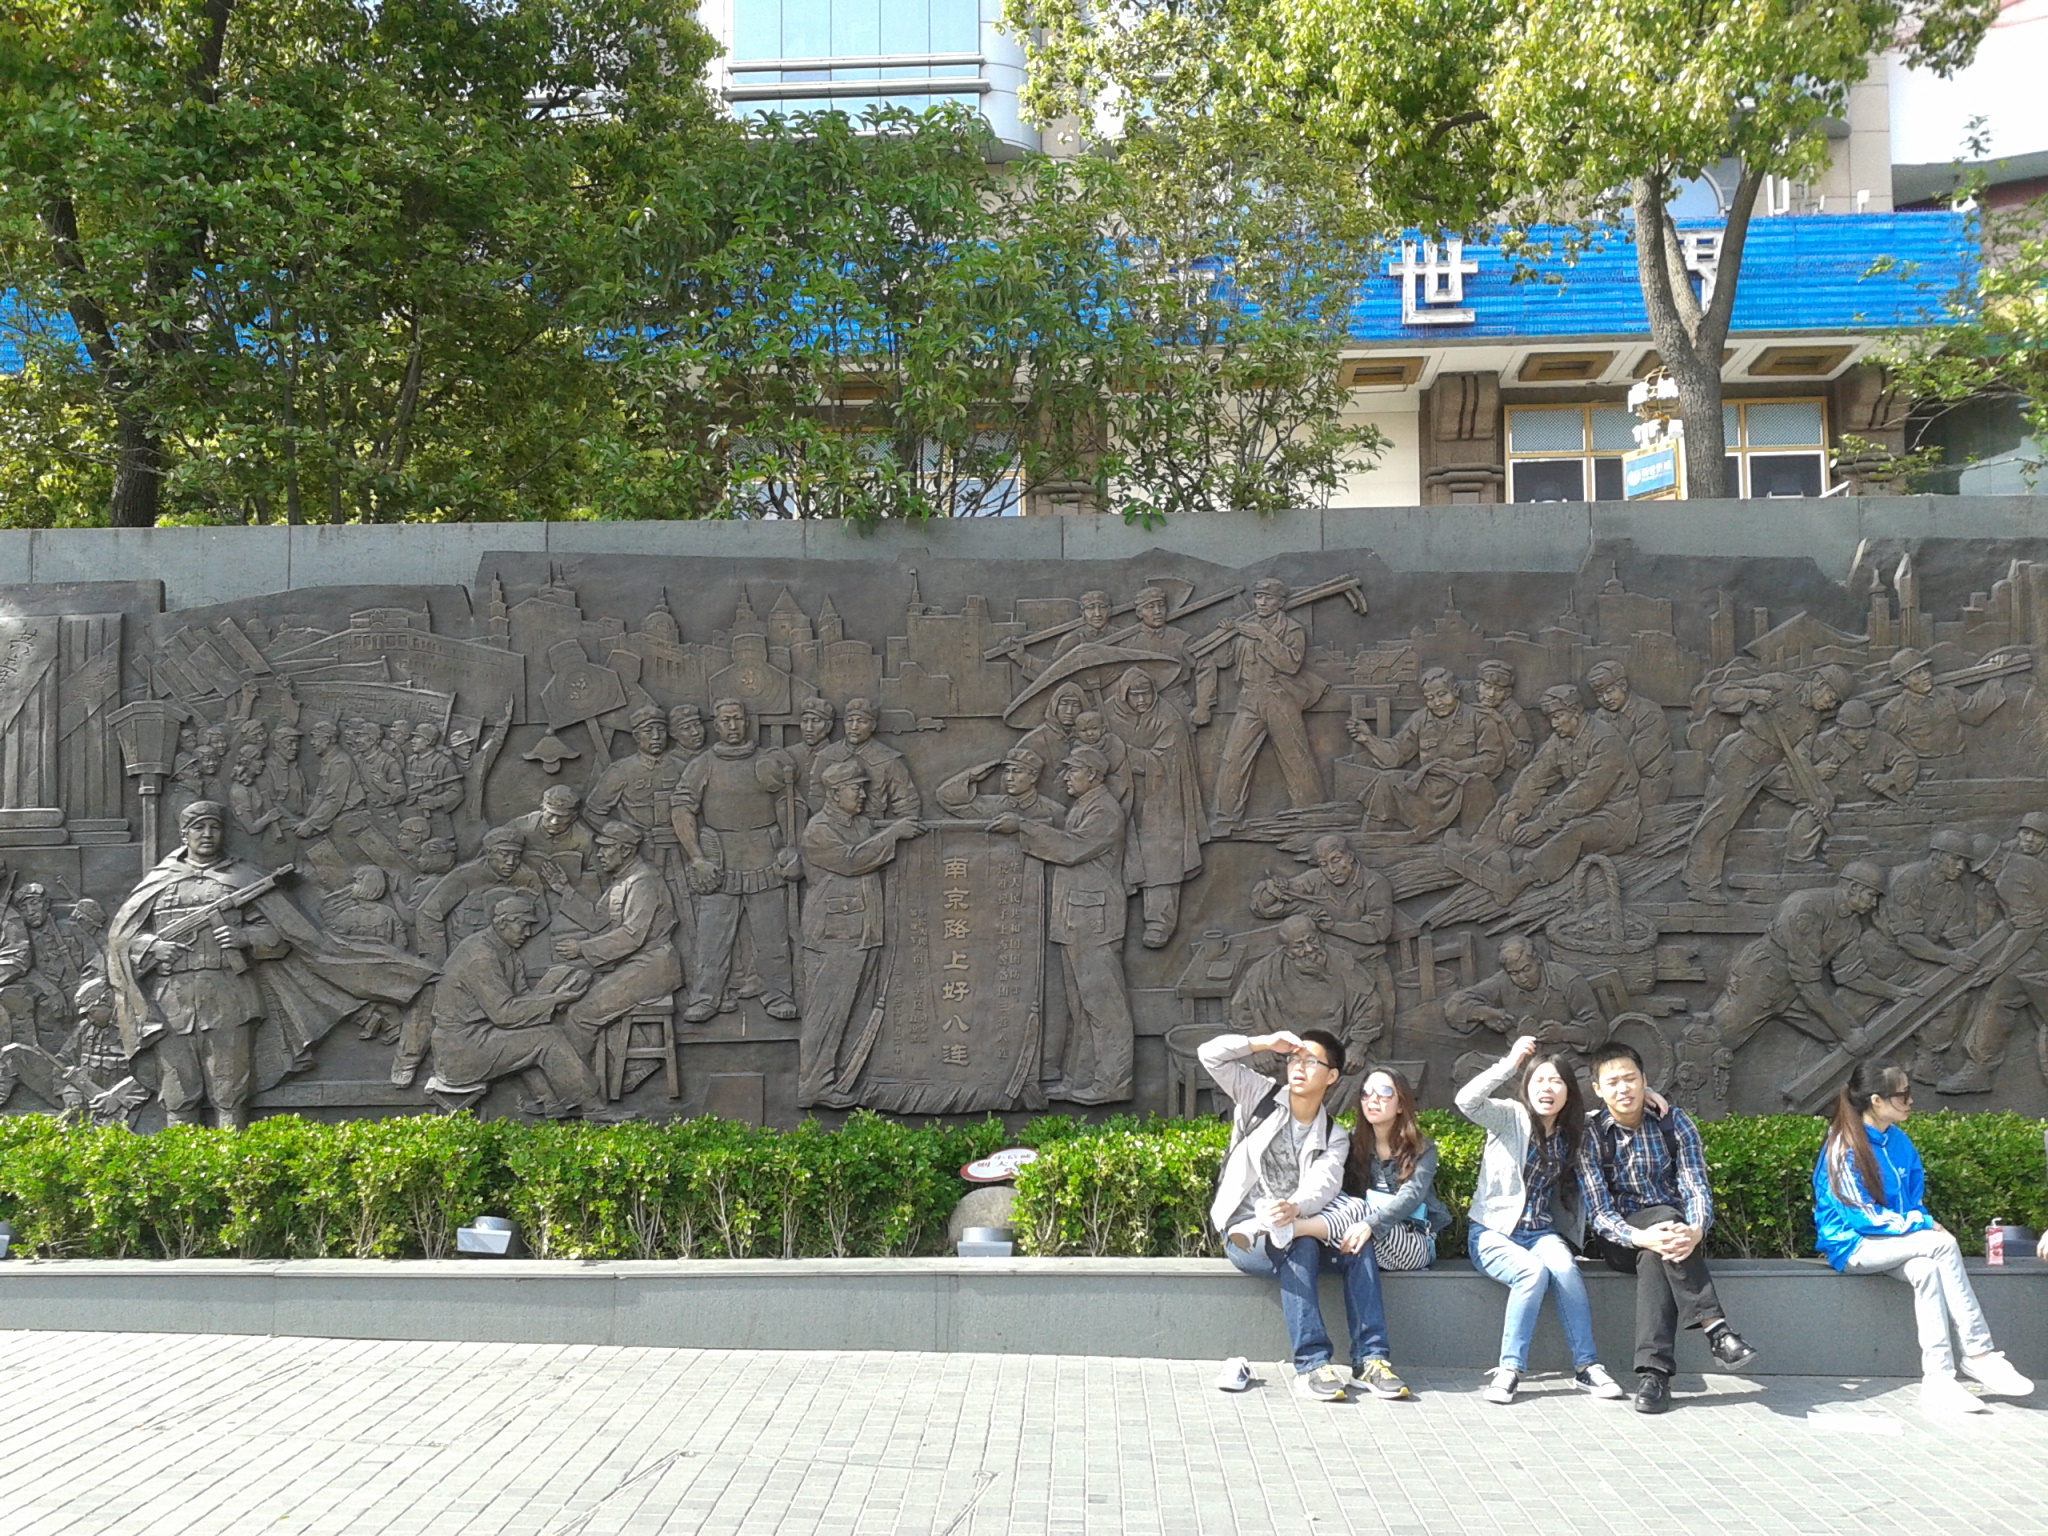 Tavaszi napsütés - People’s Square (人民广场), Shanghai